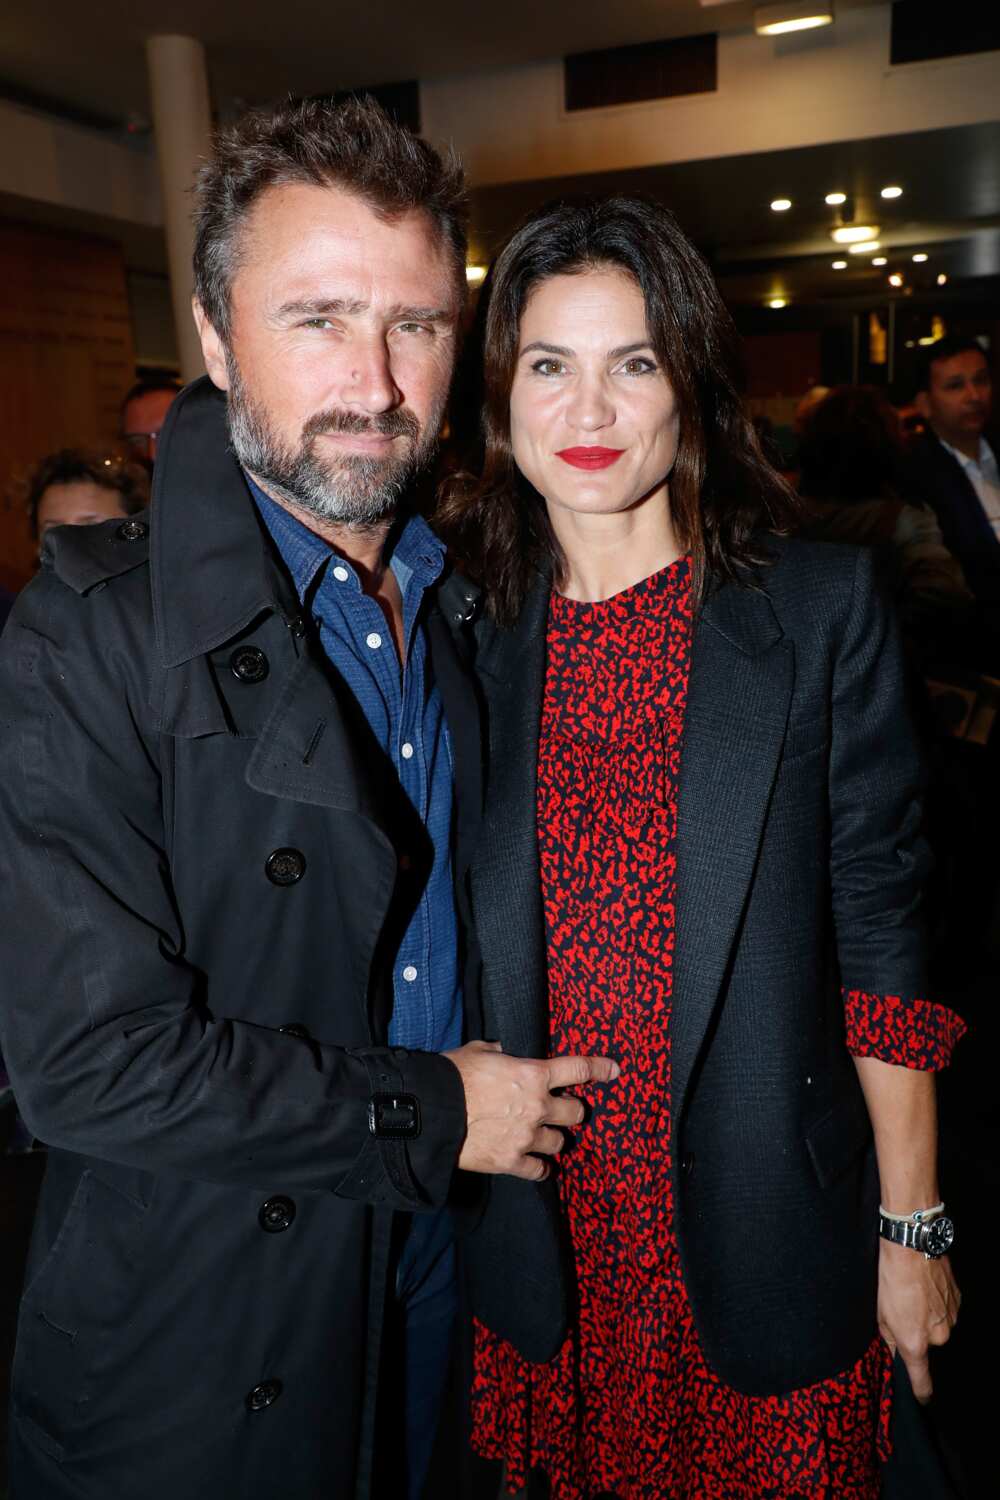 Juliette Brasseur et son ex-mari.
Photo by Bertrand Rindoff Petroff/Getty Images